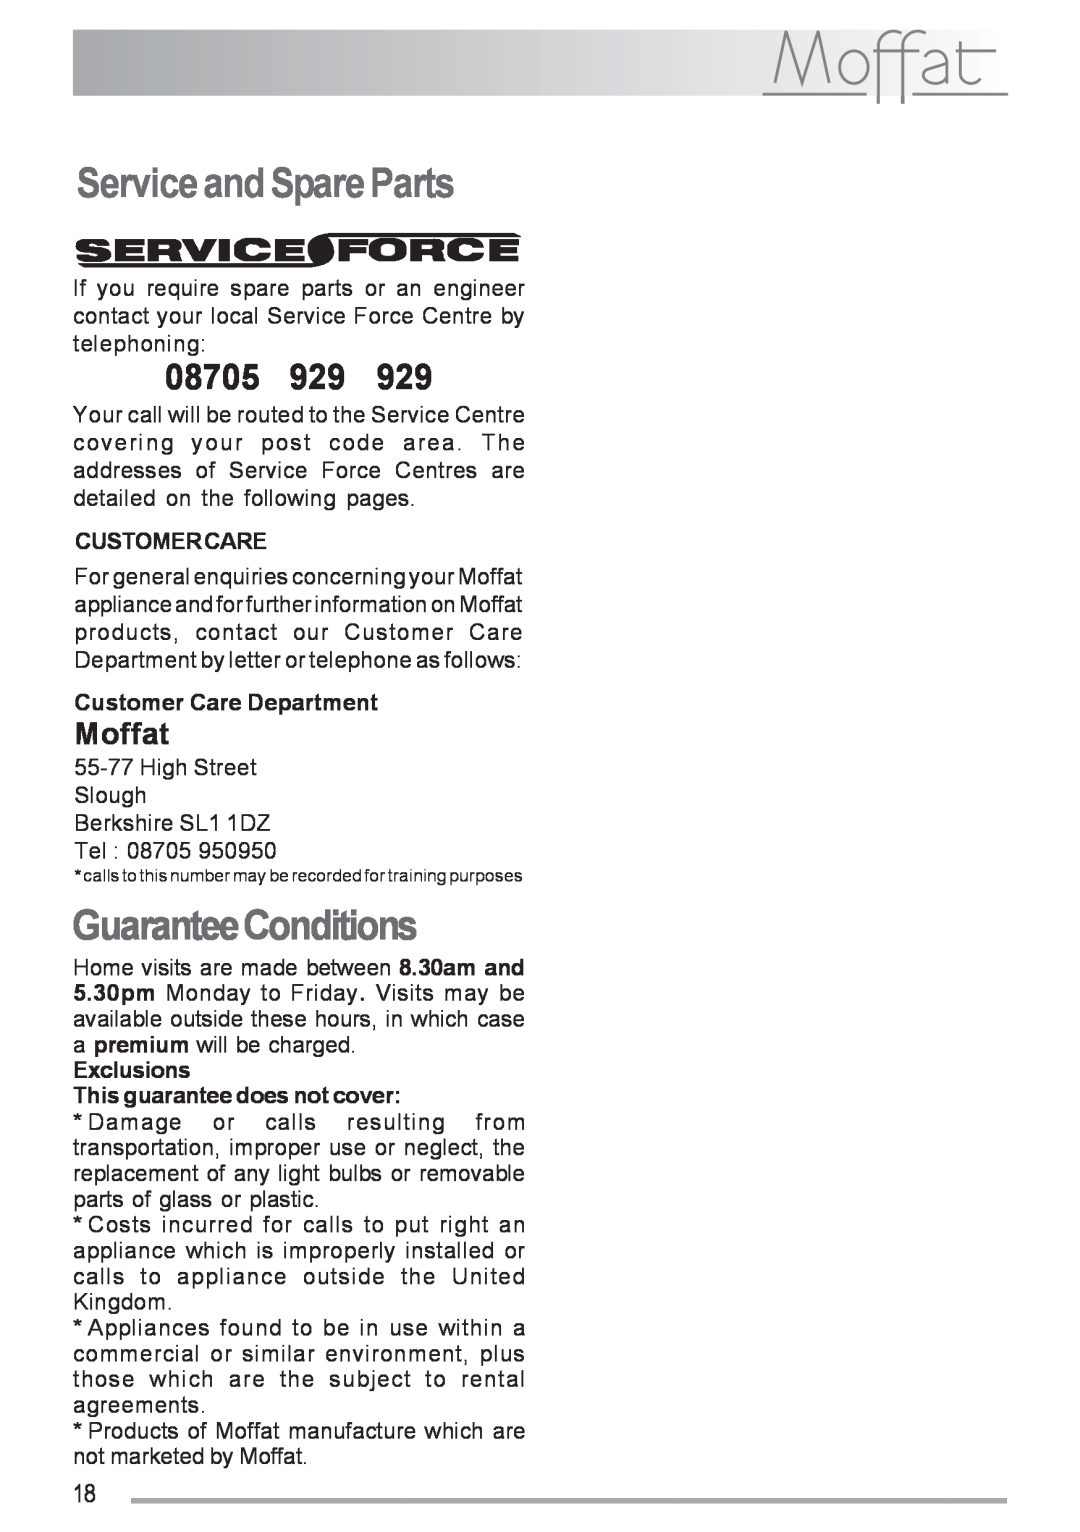 Moffat MSF 611 manual Service and Spare Parts, GuaranteeConditions, 08705, Moffat, Customercare, Customer Care Department 